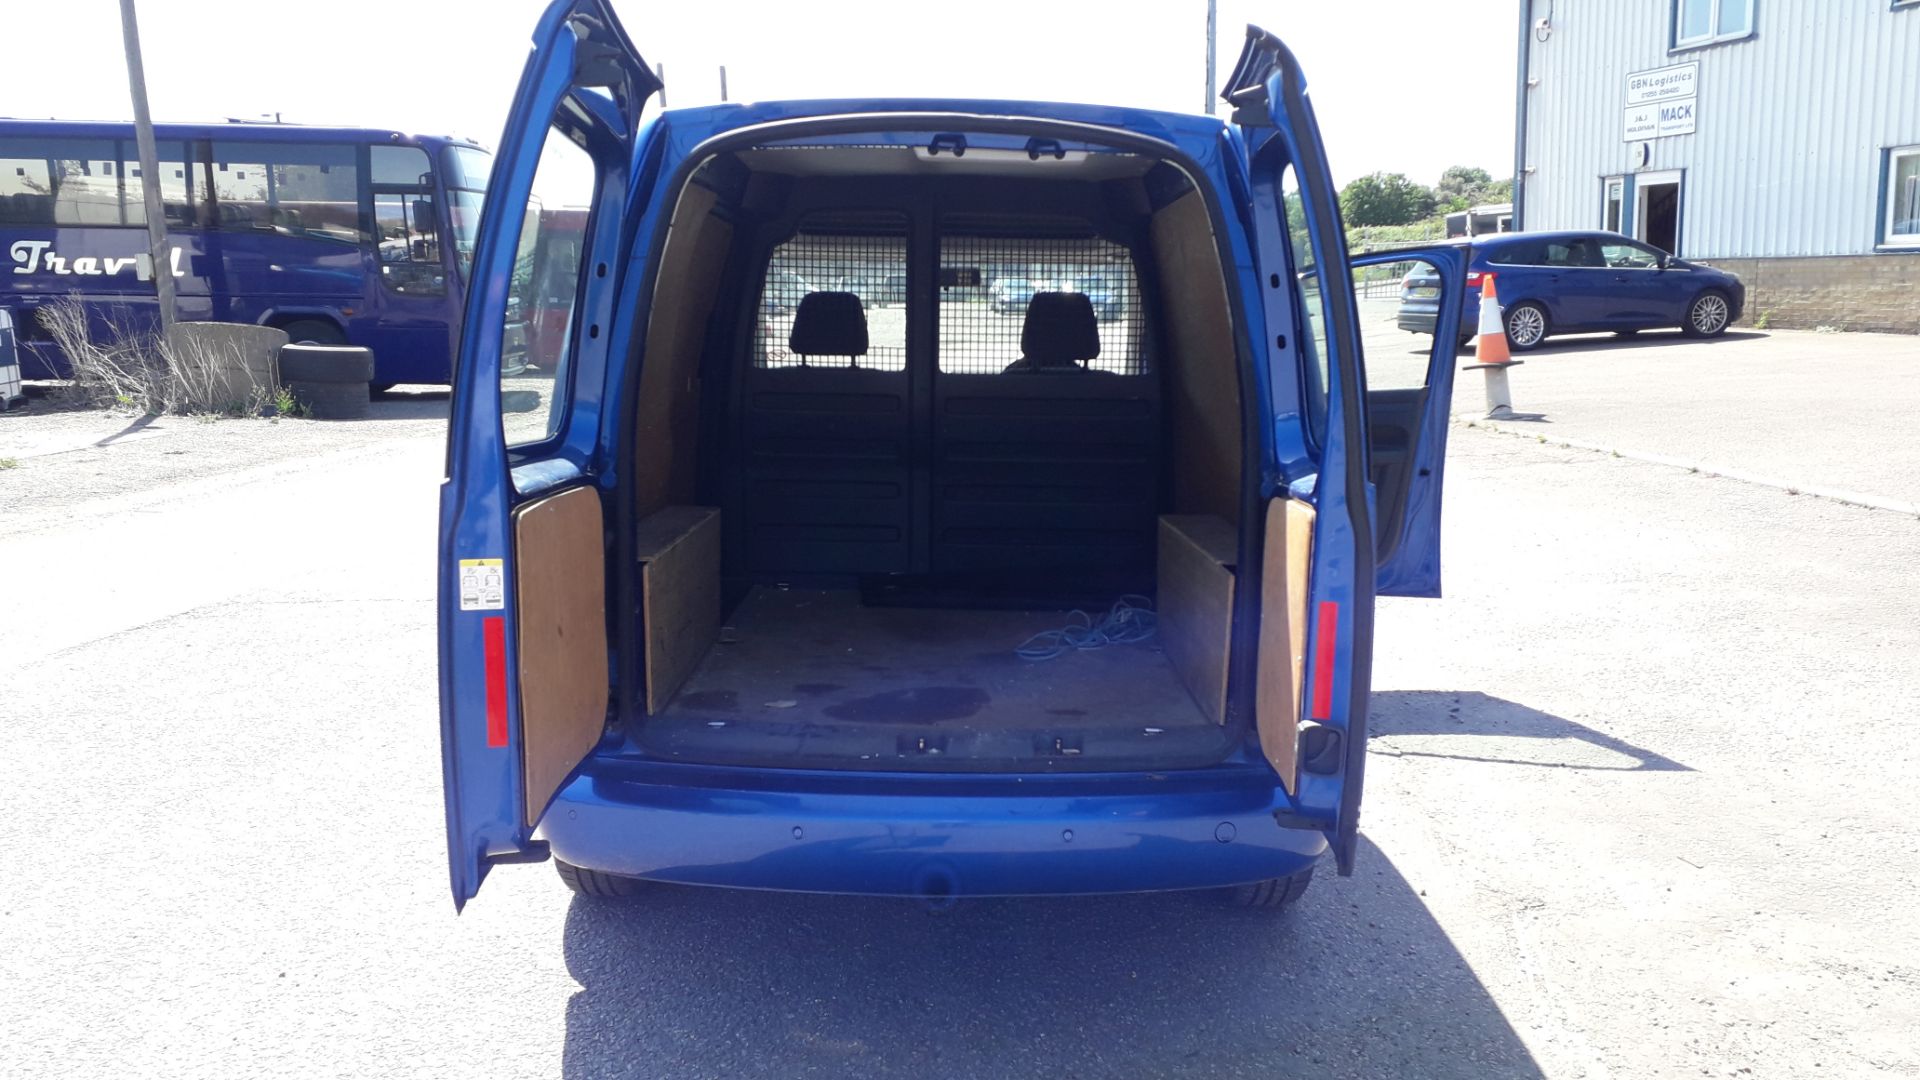 VW Caddy C20 102 Bluemotion Panel Van, Regis - Image 10 of 21